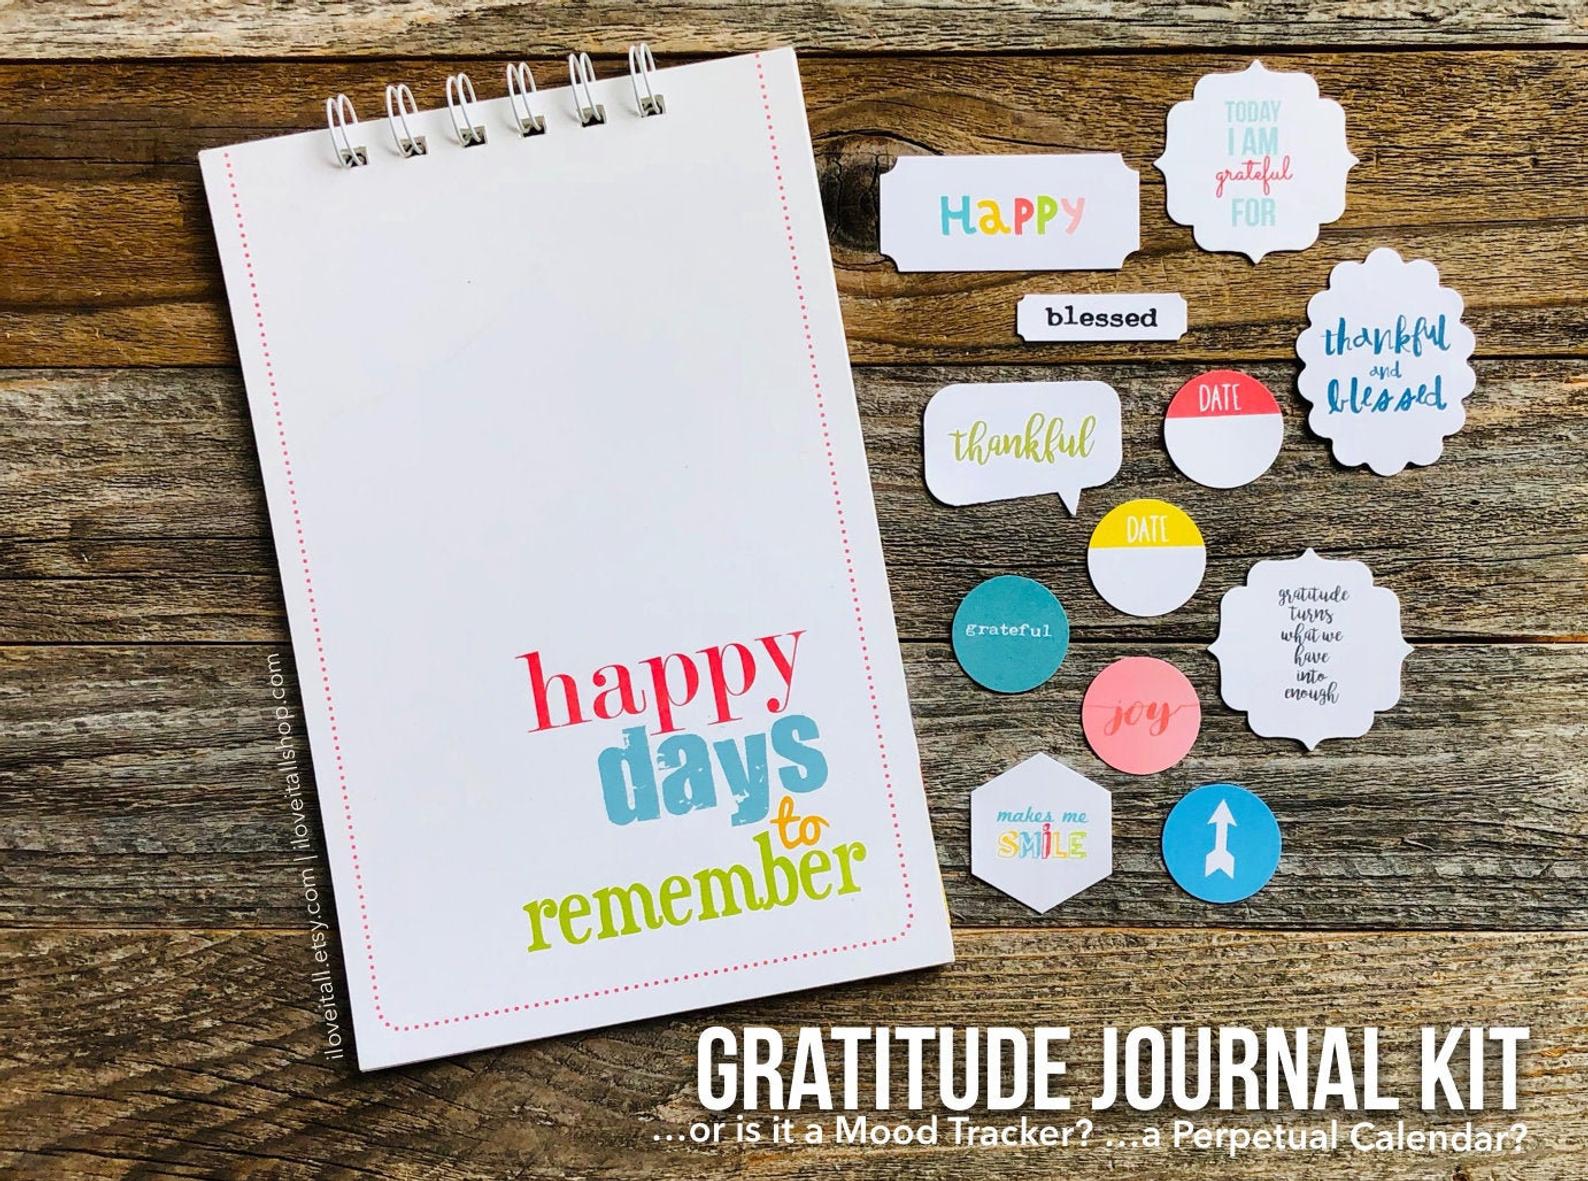 #Gratitude Journal #2020 #gratitude #journal #journaling #reflection journal #grateful #gratefulness #thankfulness journal #Things I Am Grateful For #midori #Travelers Notebook